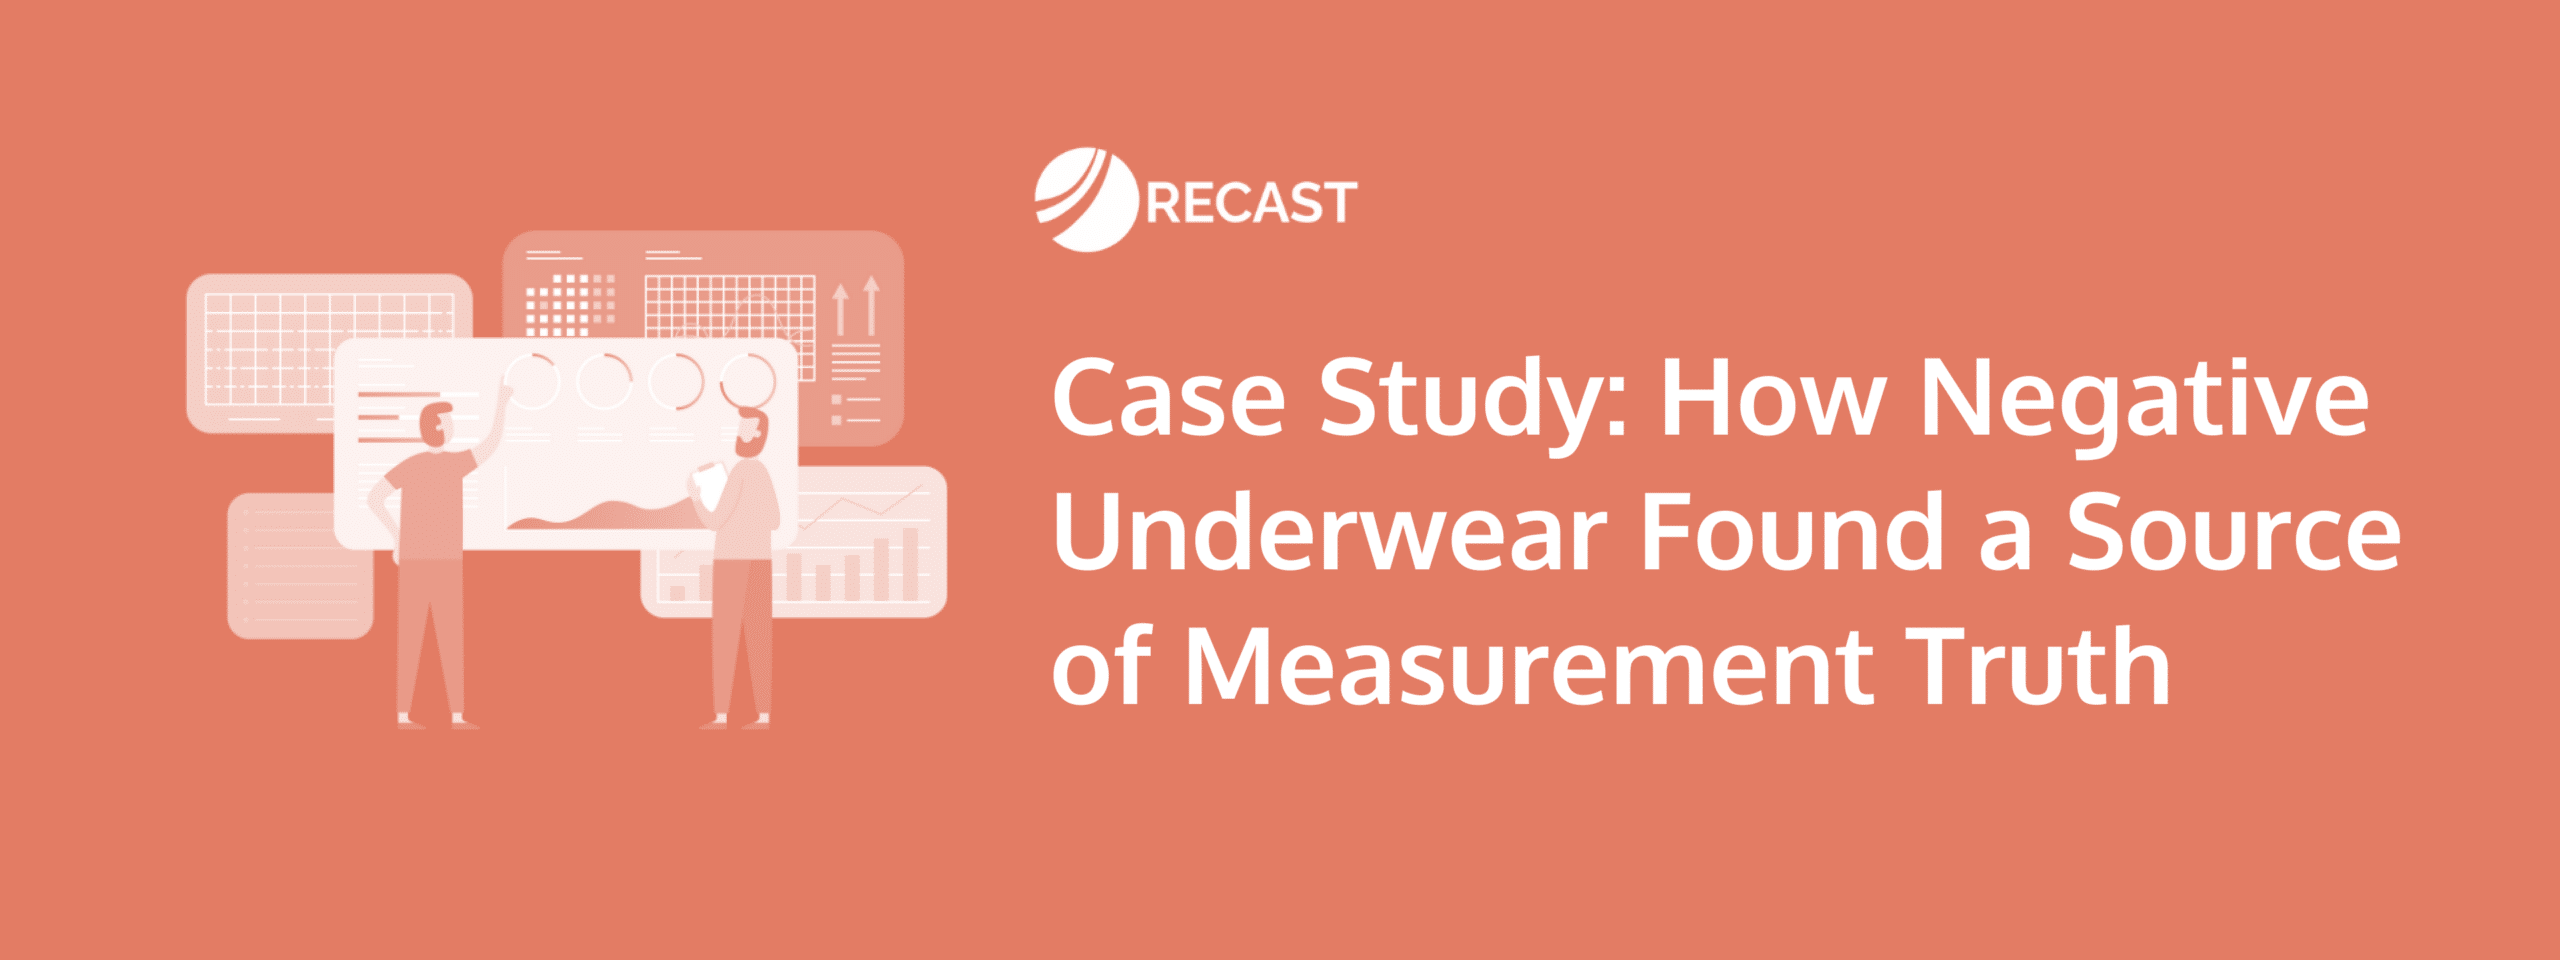 How Negative Underwear Found Their Measurement Source of Truth - Recast